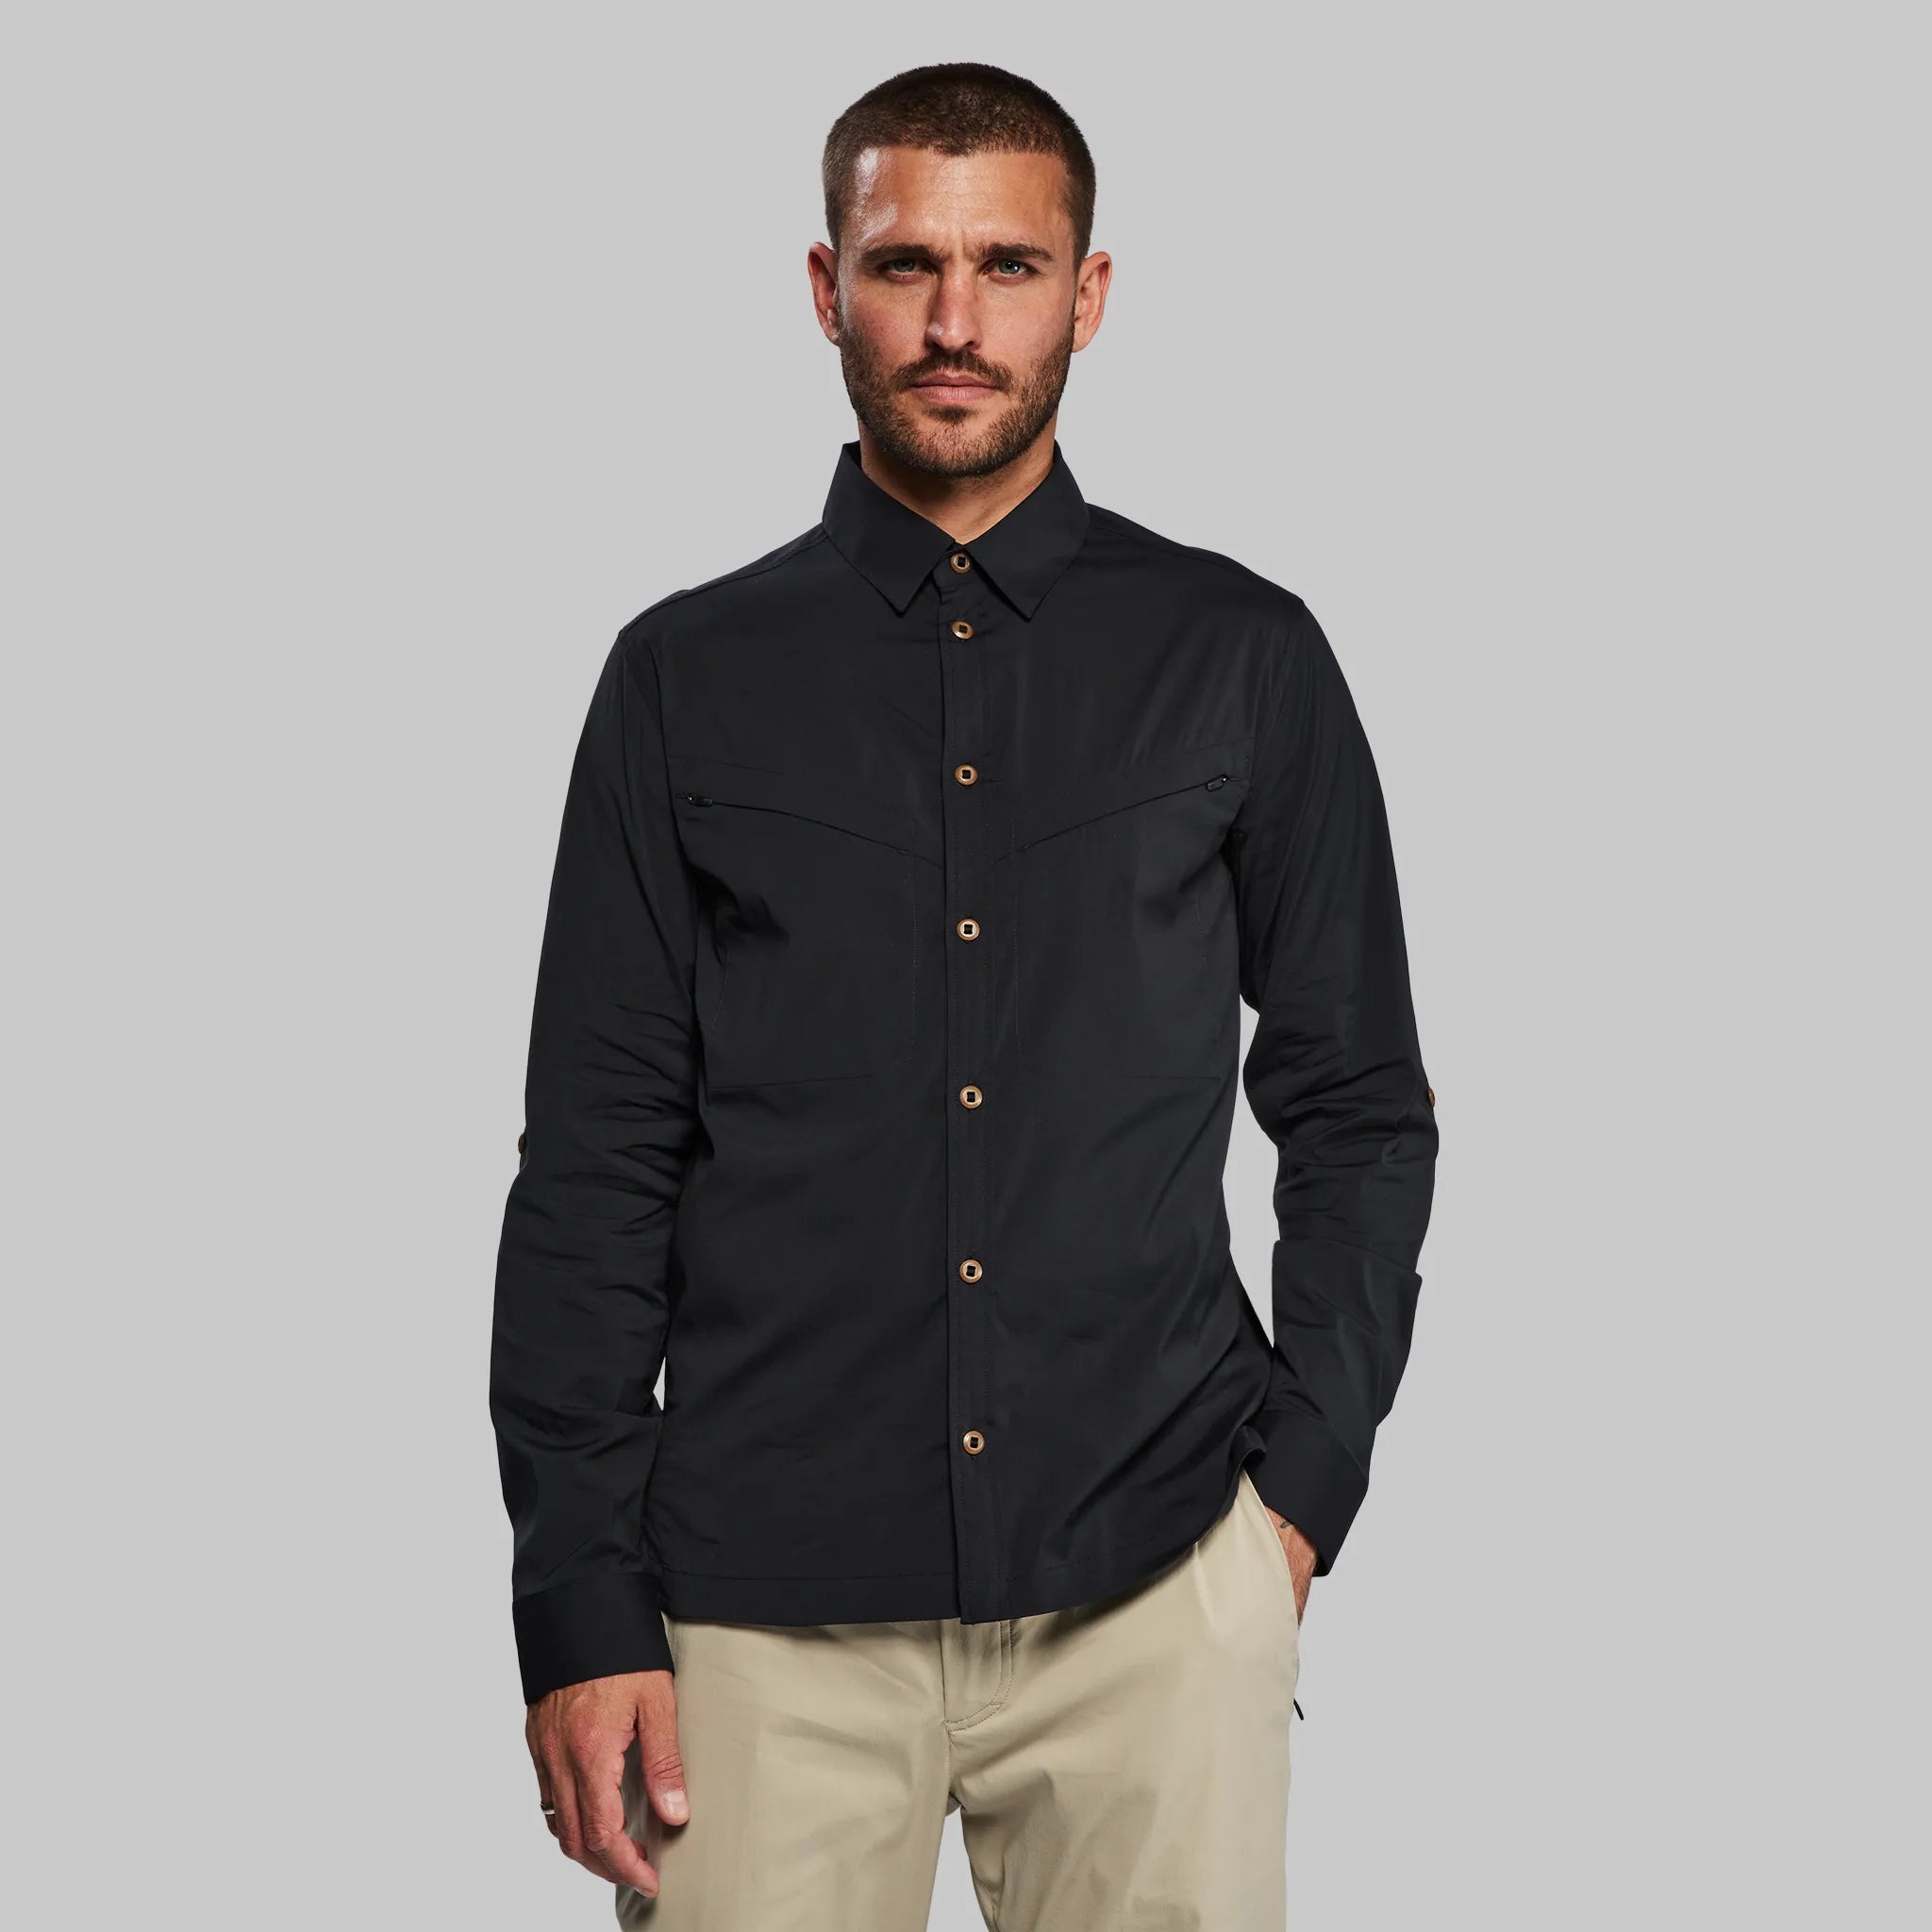 Equator Shirt with Collar. Black edition